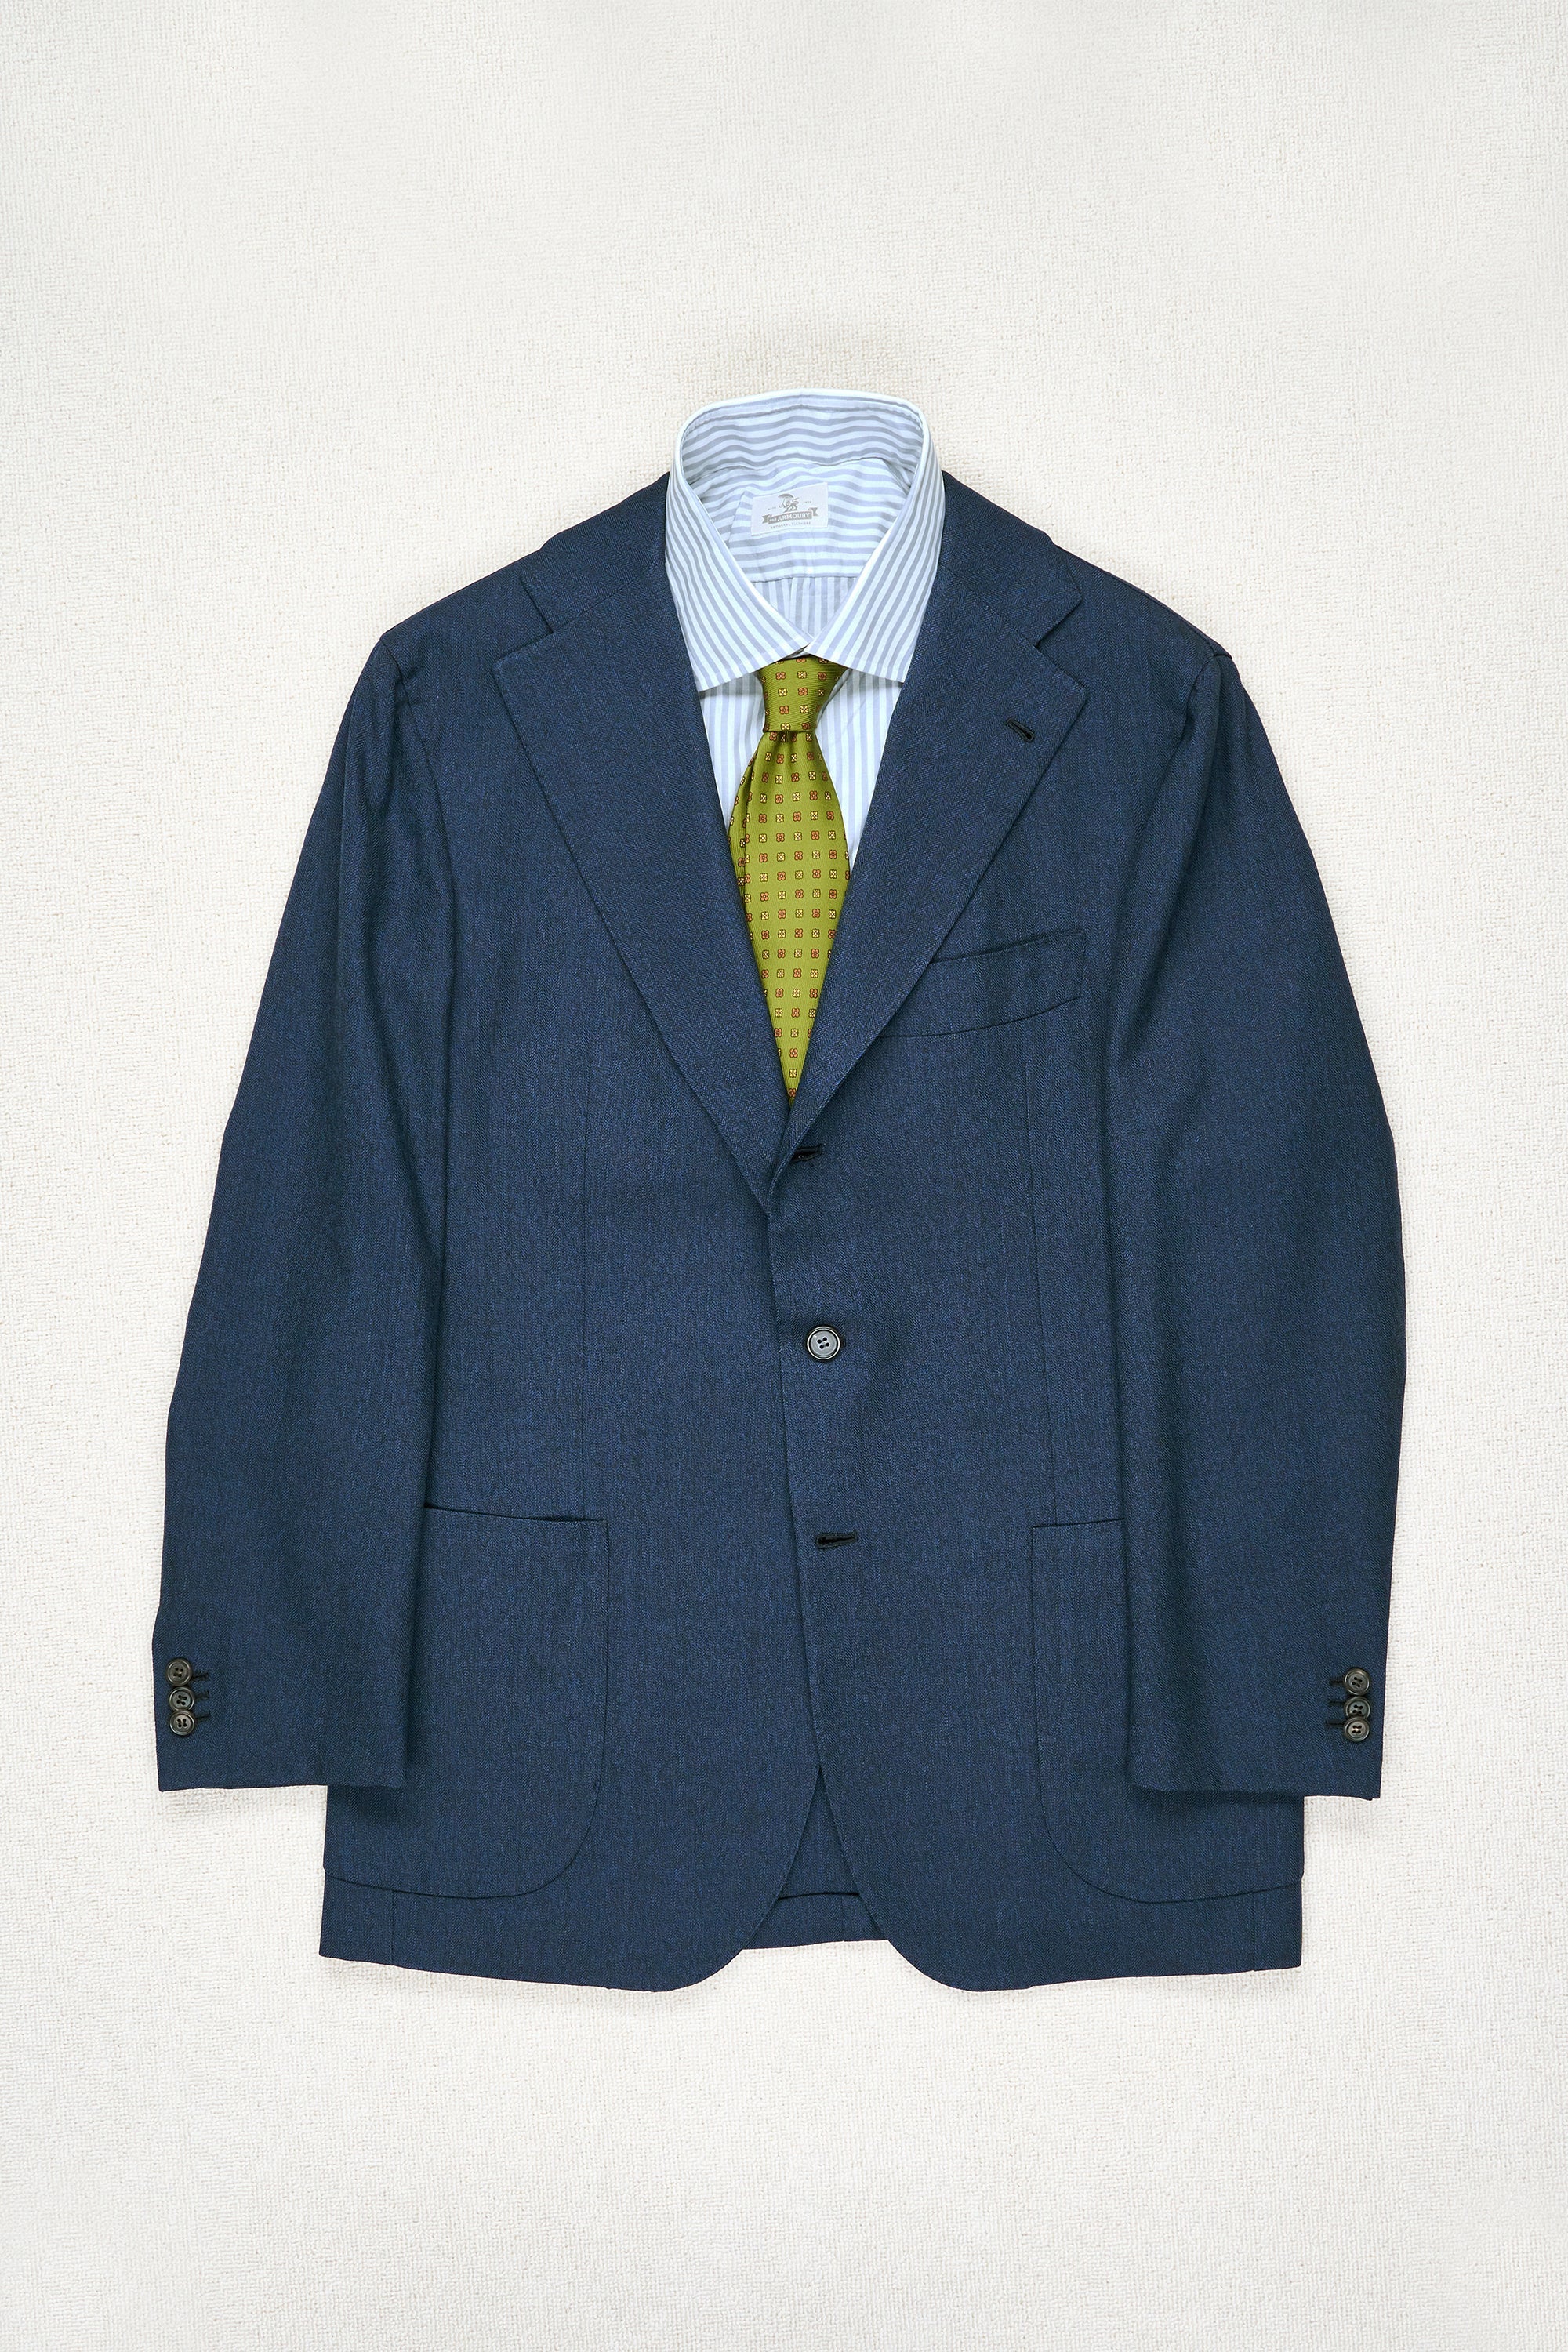 Orazio Luciano Navy Wool Herringbone Sport Coat